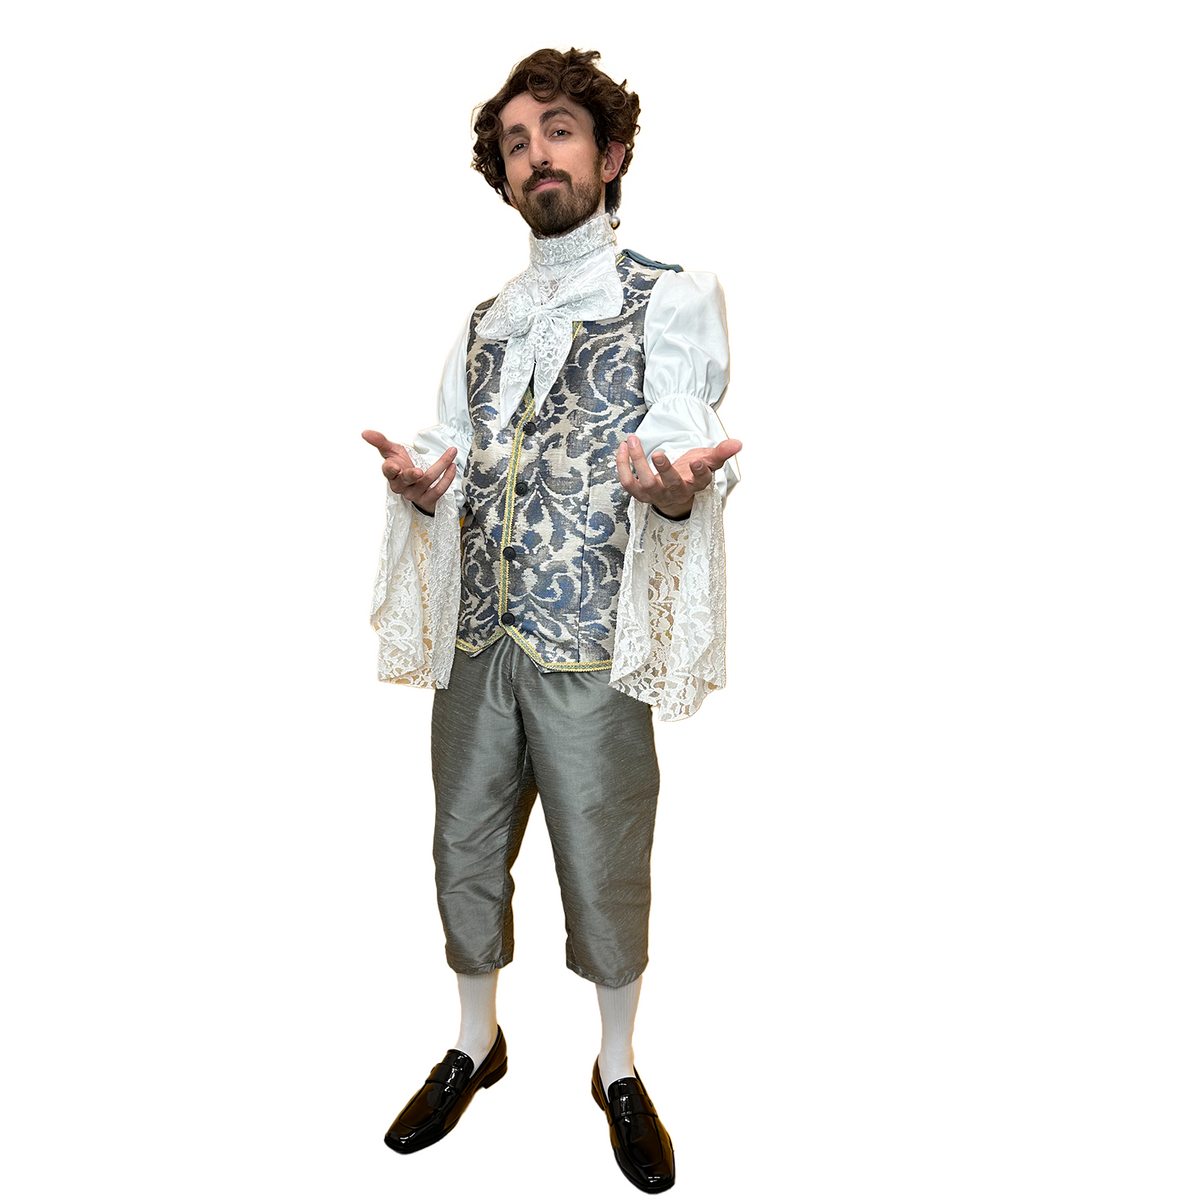 Regal Ornate Colonial Lord Luke Adult Costume